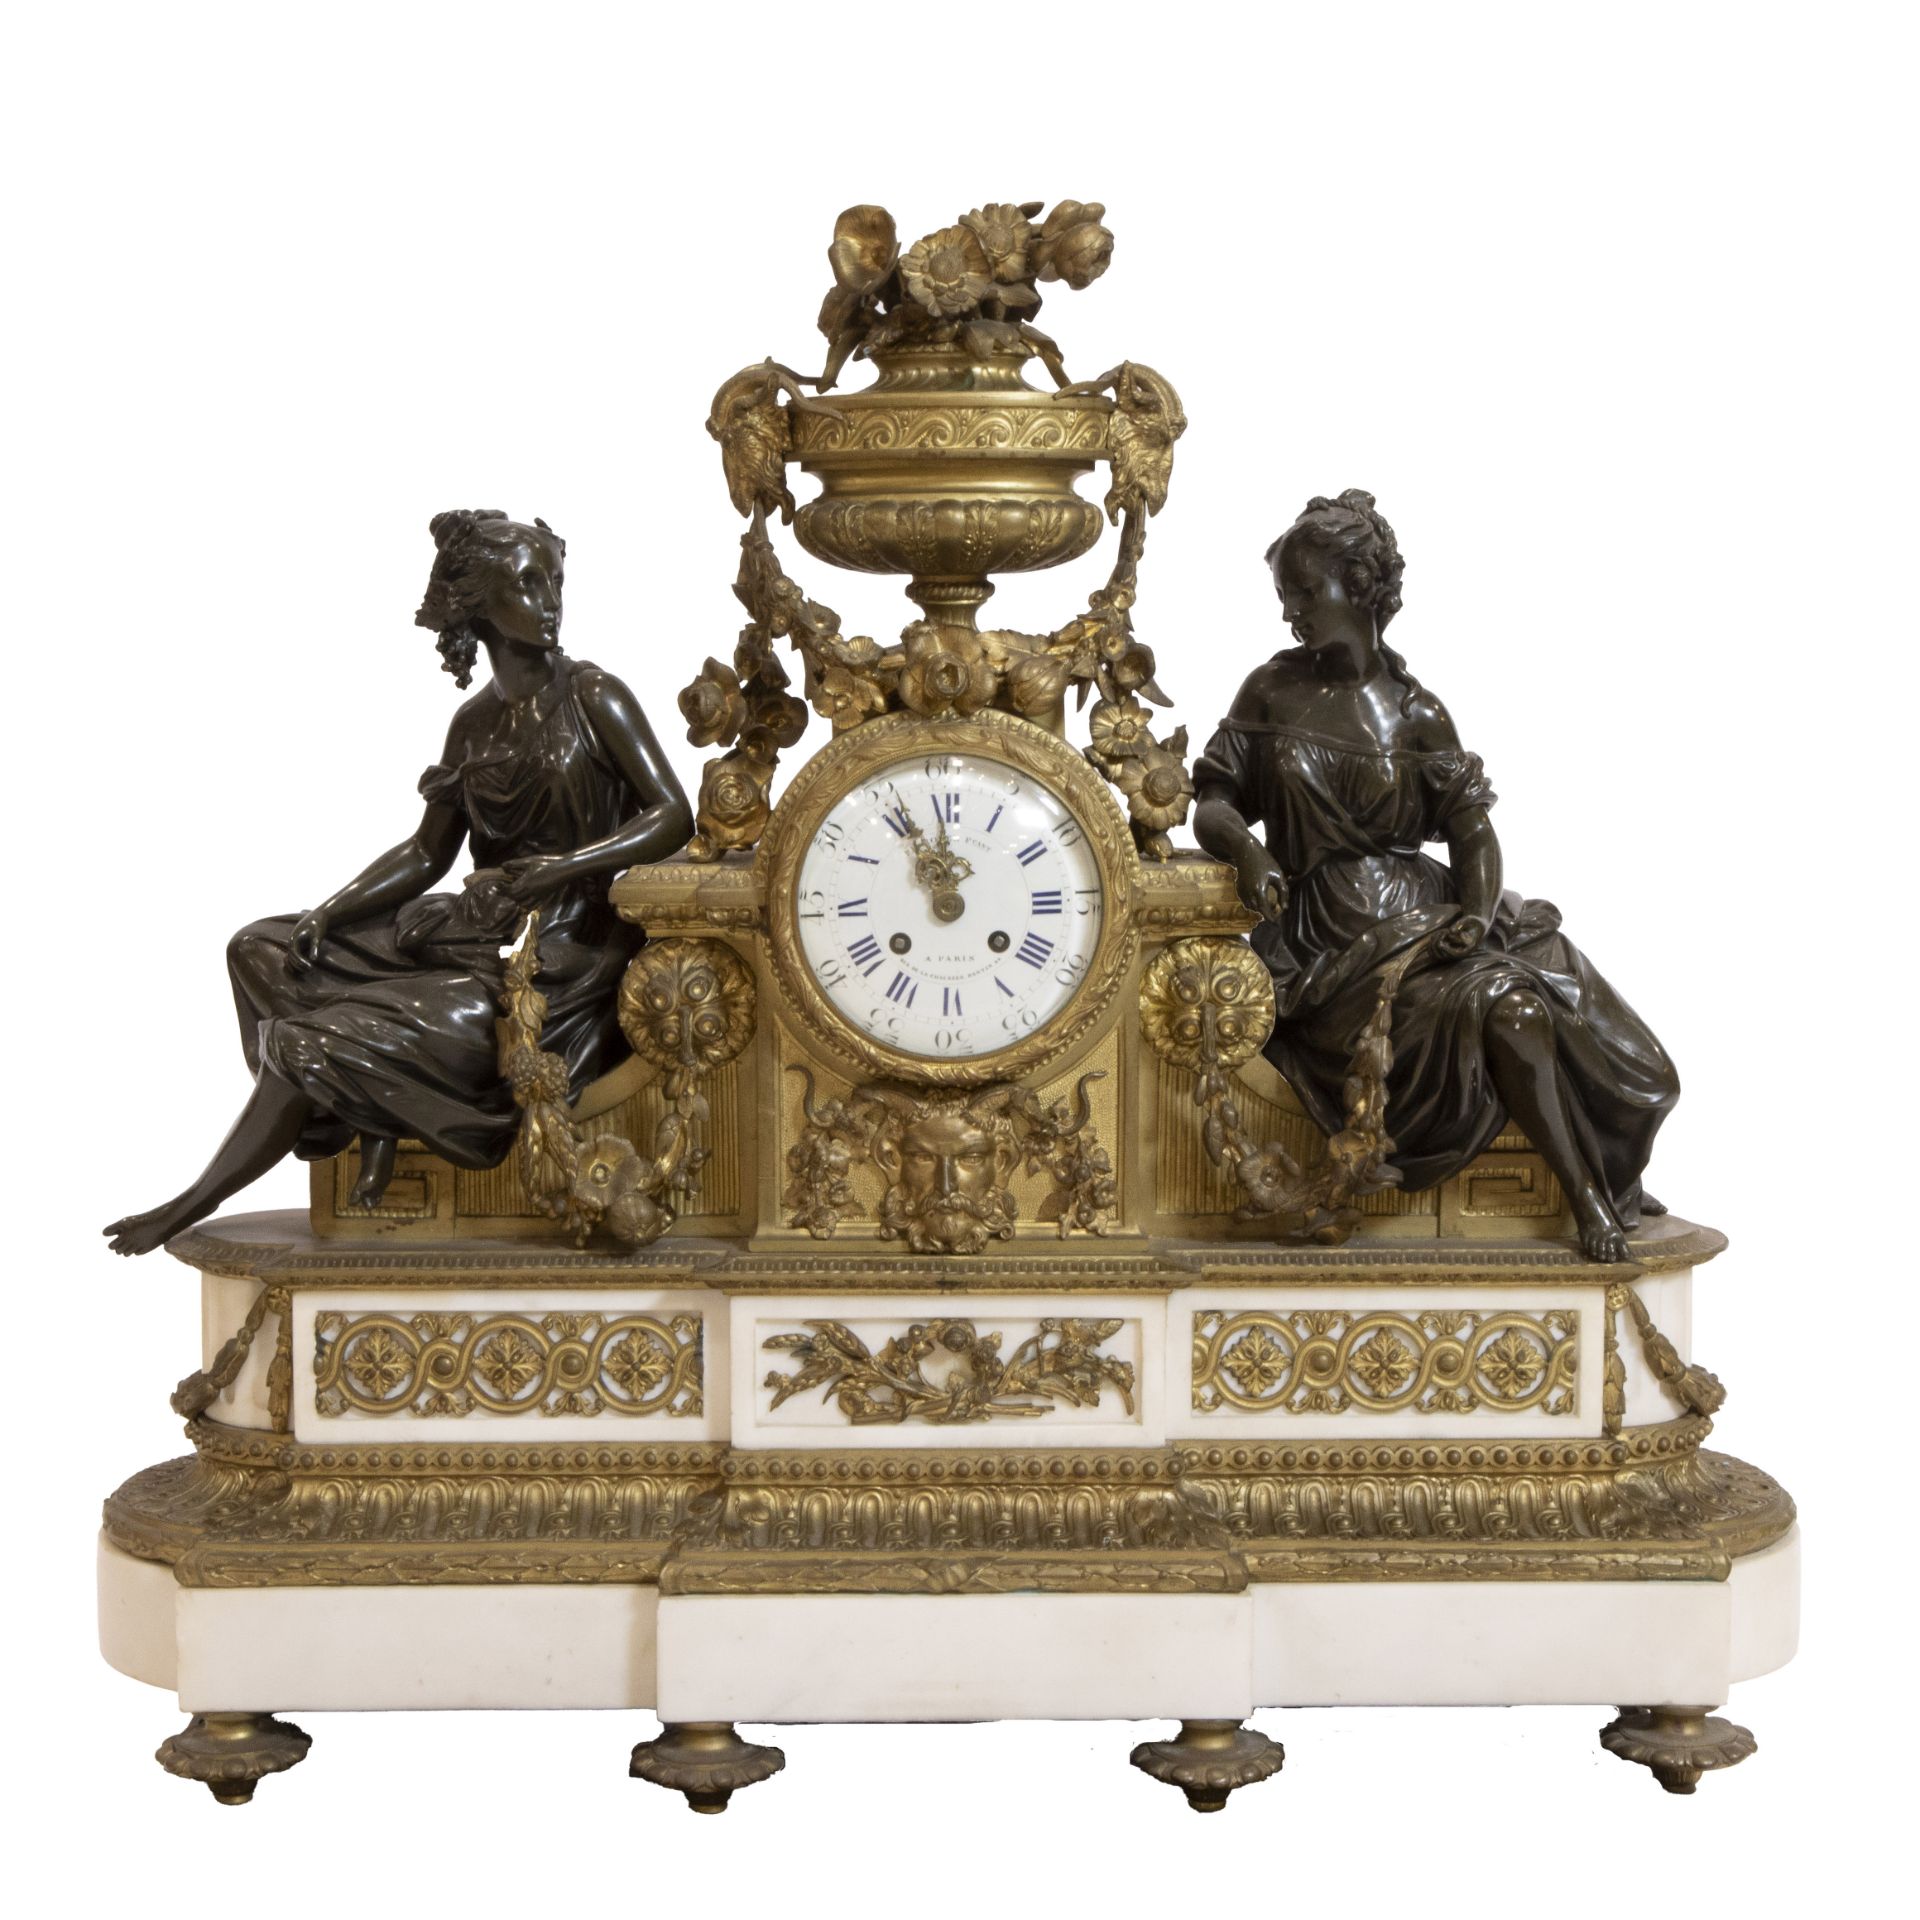 Impressive 19th century French bronze Louis XVI mantel clock with white marble base circa 1860, dial